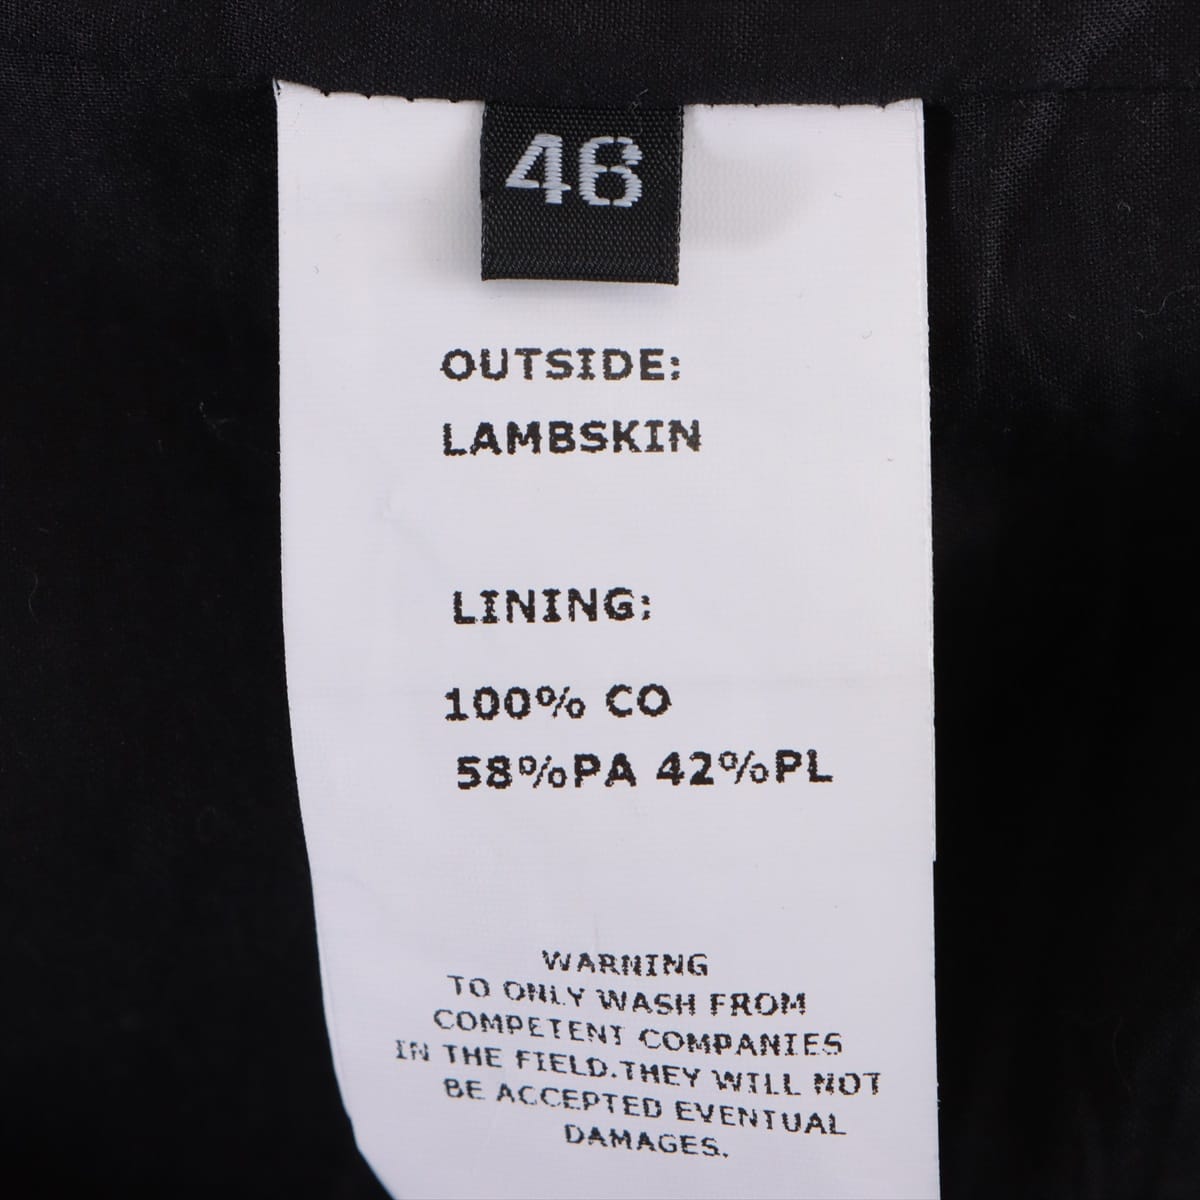 Emmeti Lambskin Leather jacket 46 Men's Black